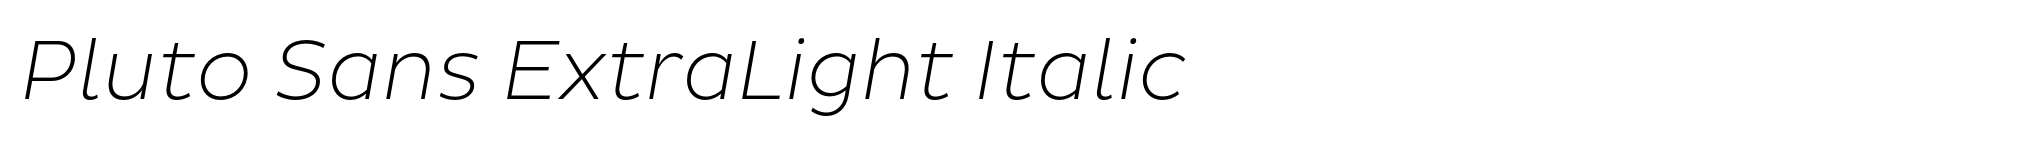 Pluto Sans ExtraLight Italic image